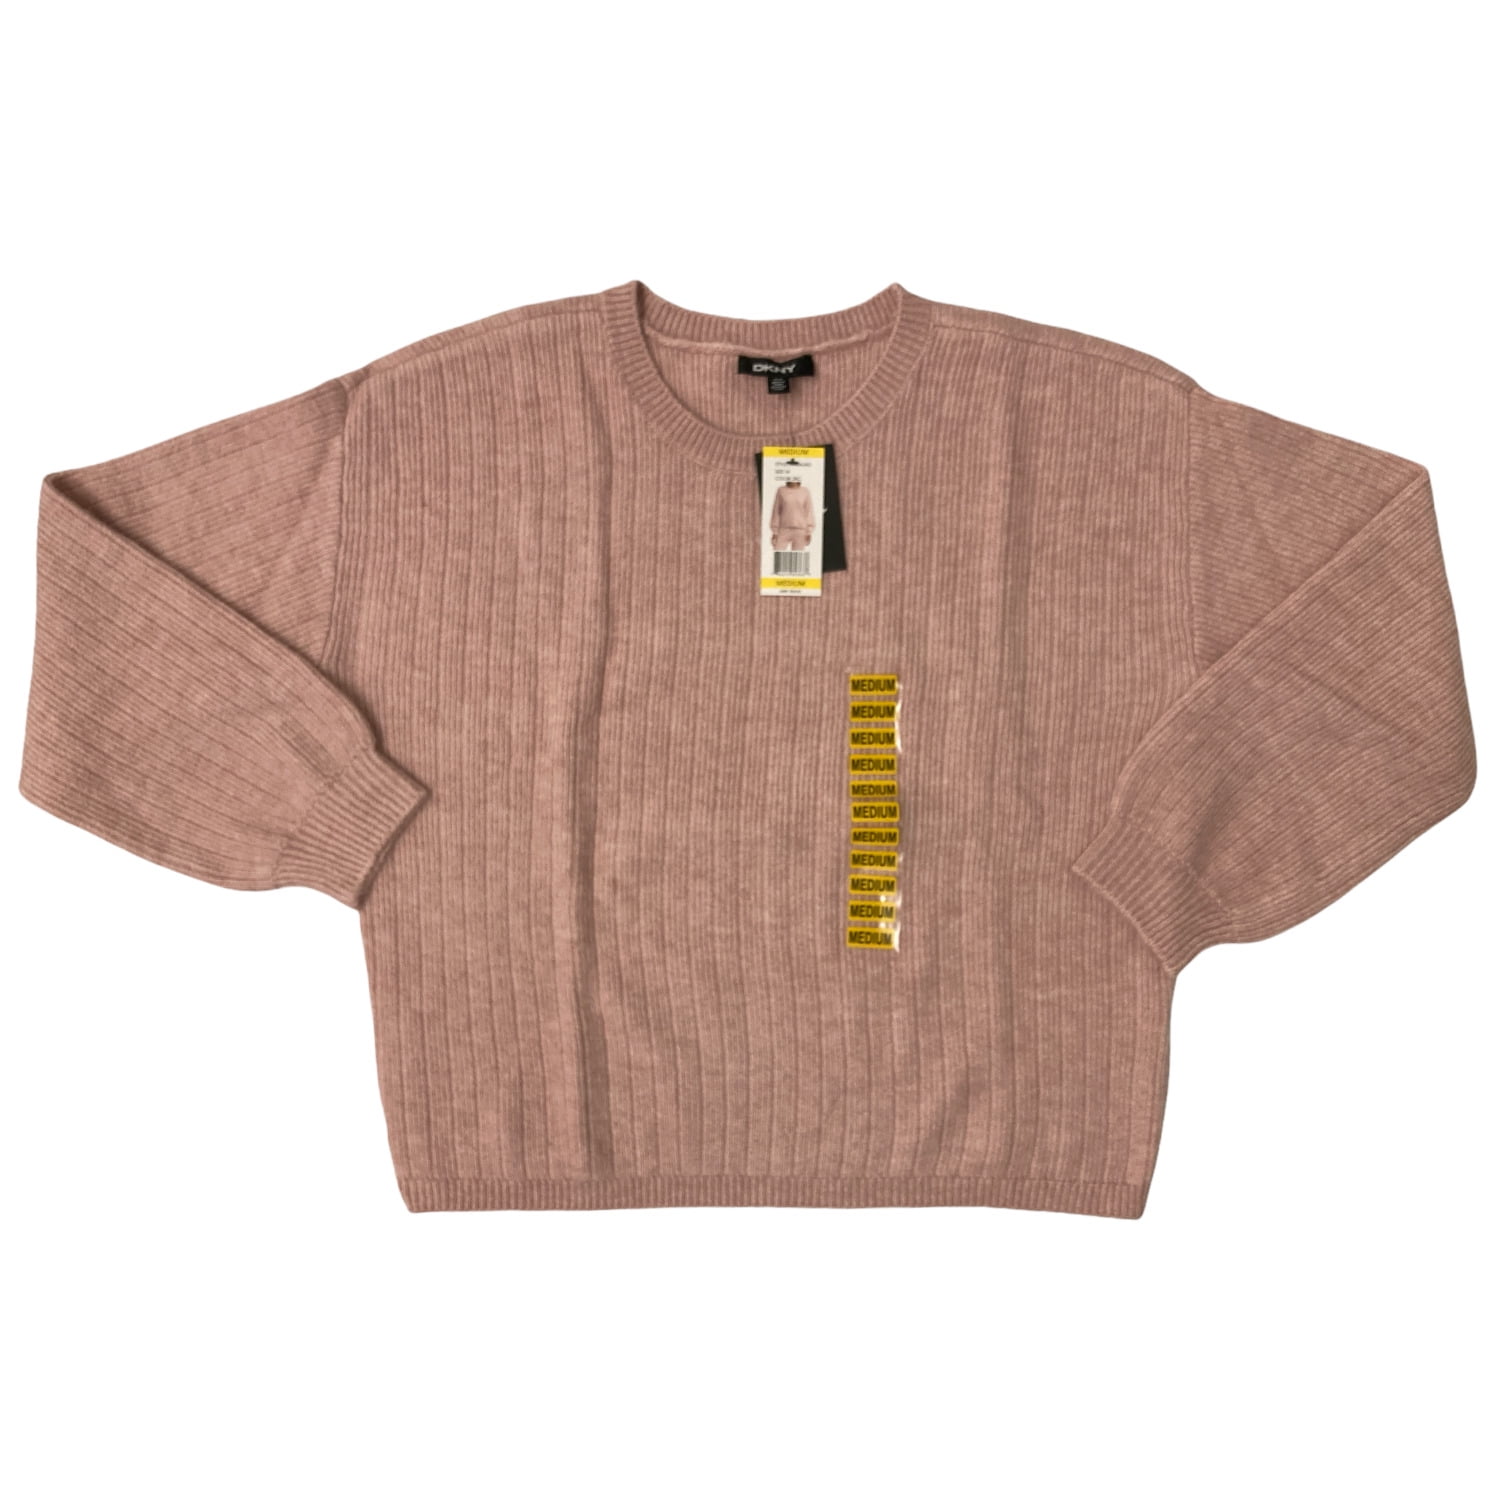 DKNY Women's Cashmere Blend Crew Neck Sweater (Enchant, XL) - Walmart.com